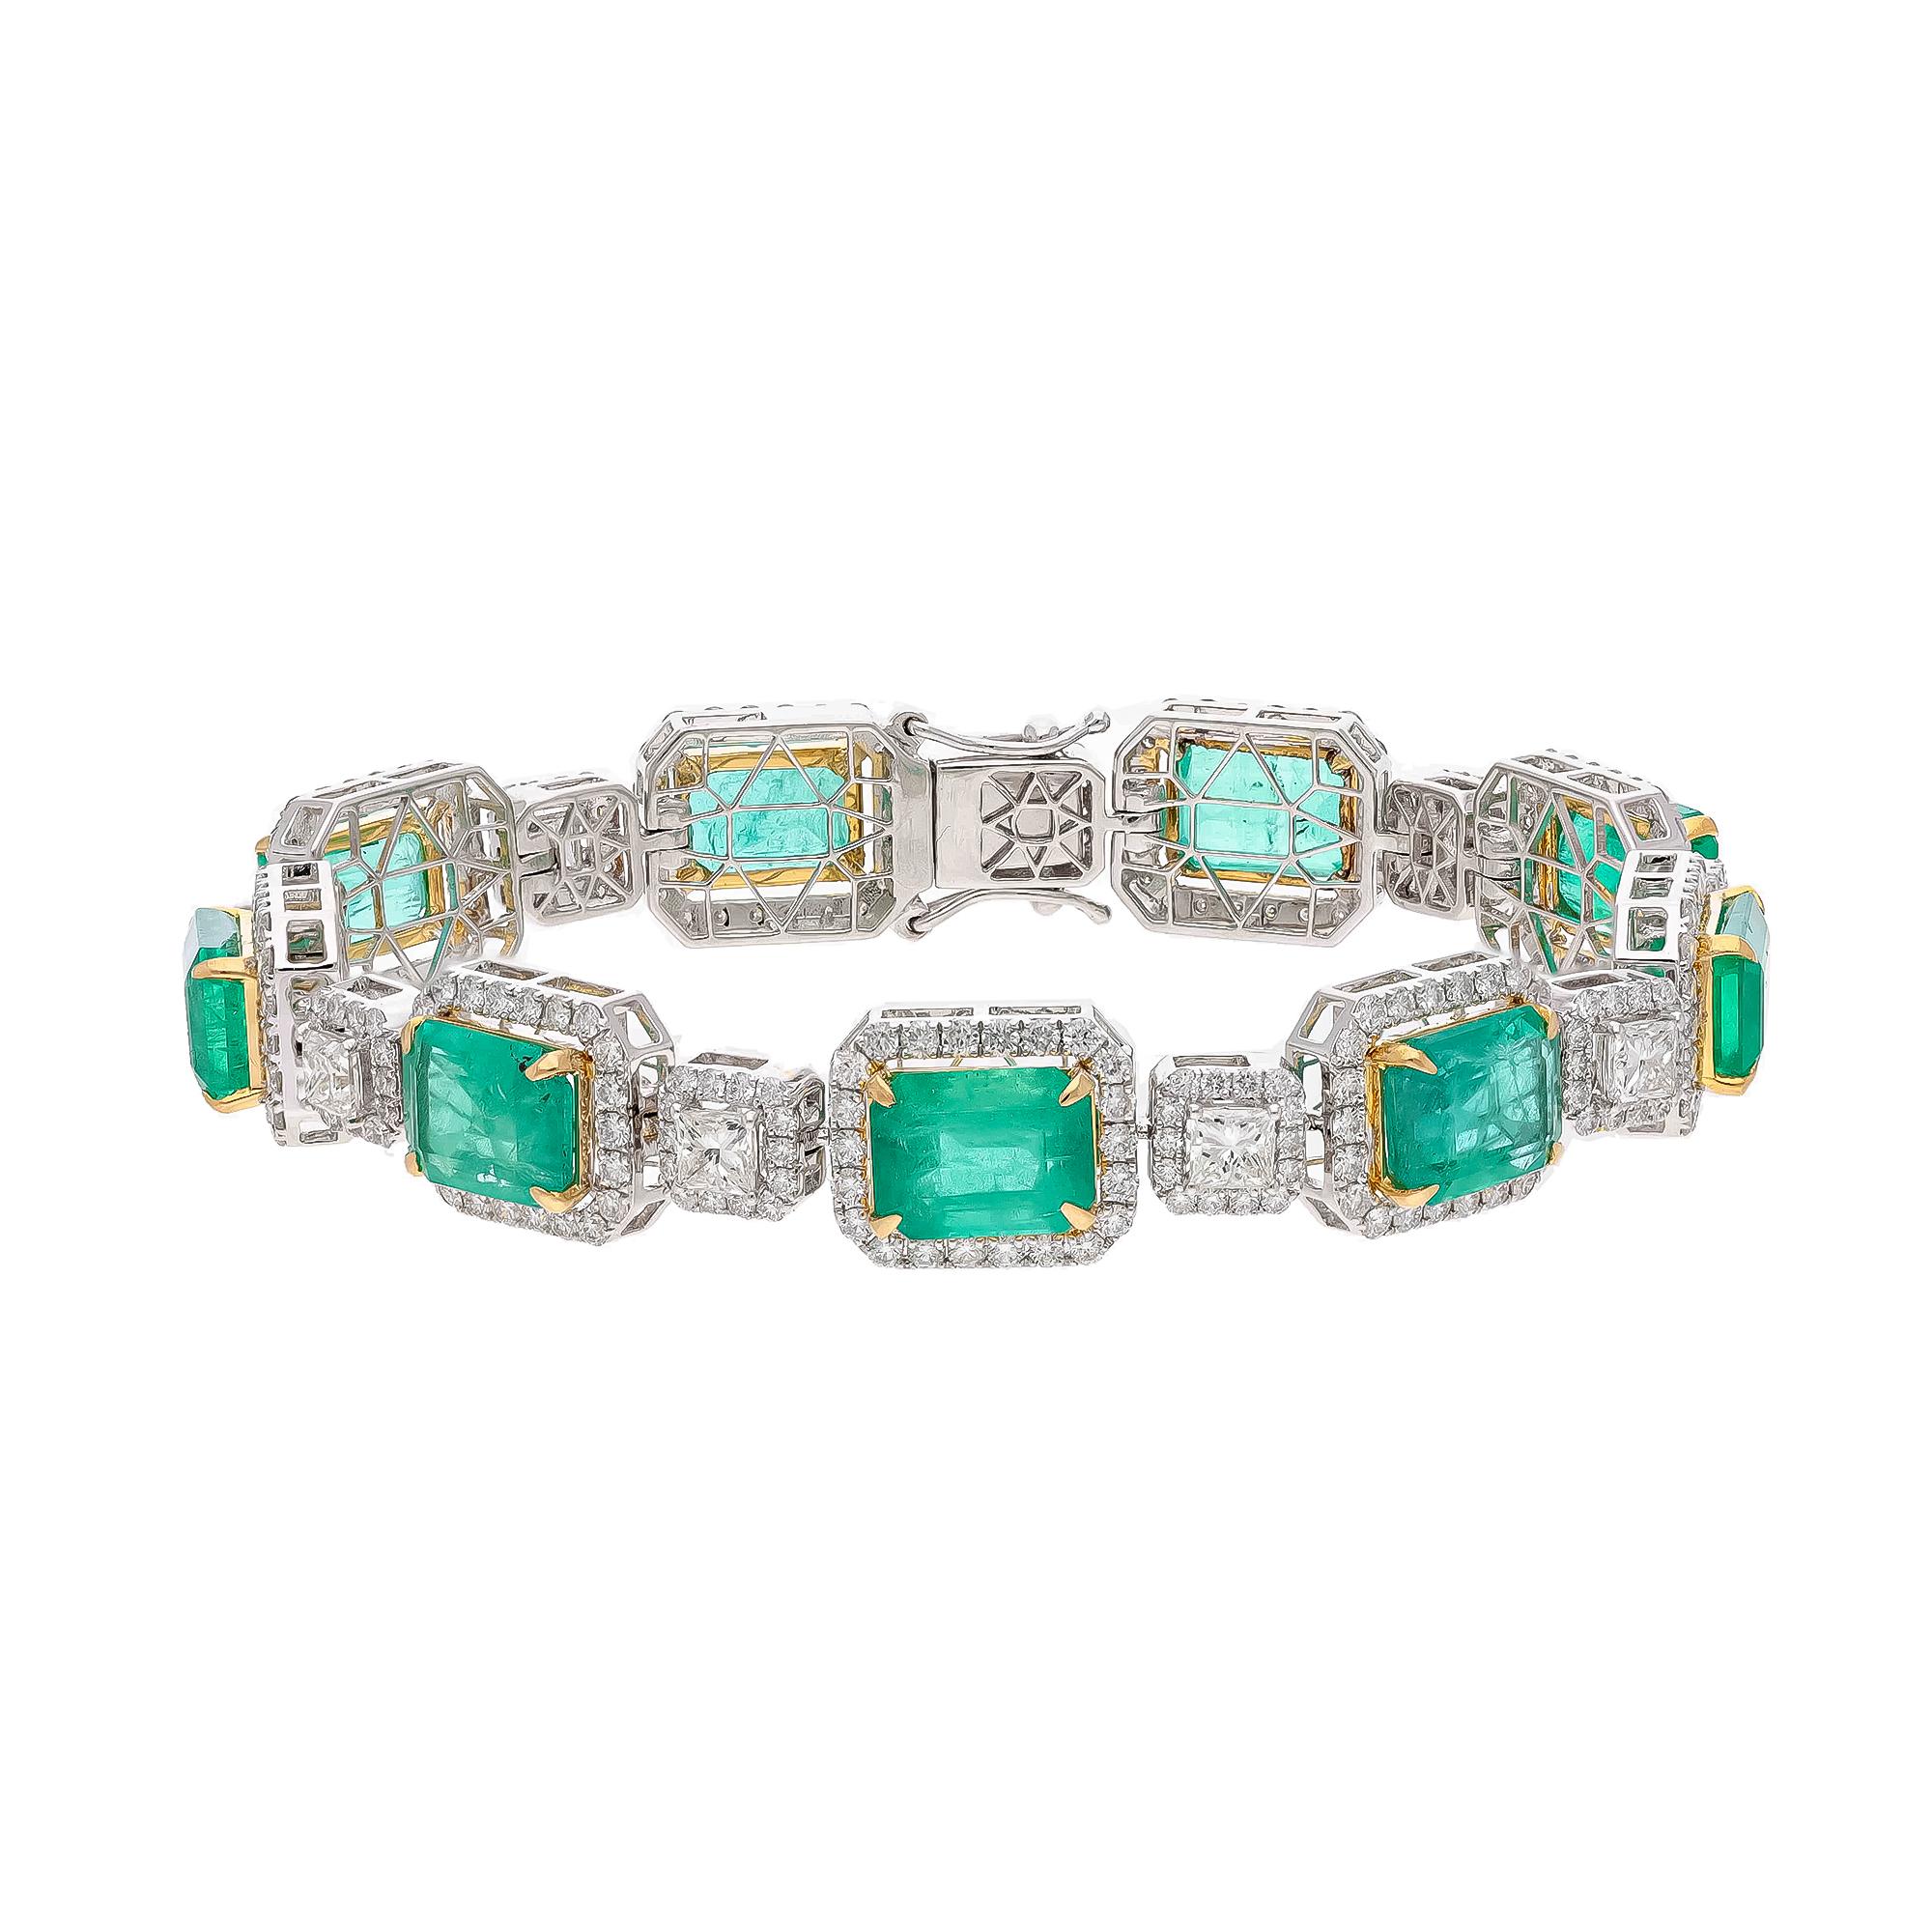 Women's Natural Zambian Emerald Bracelet with Diamond and 18k Gold